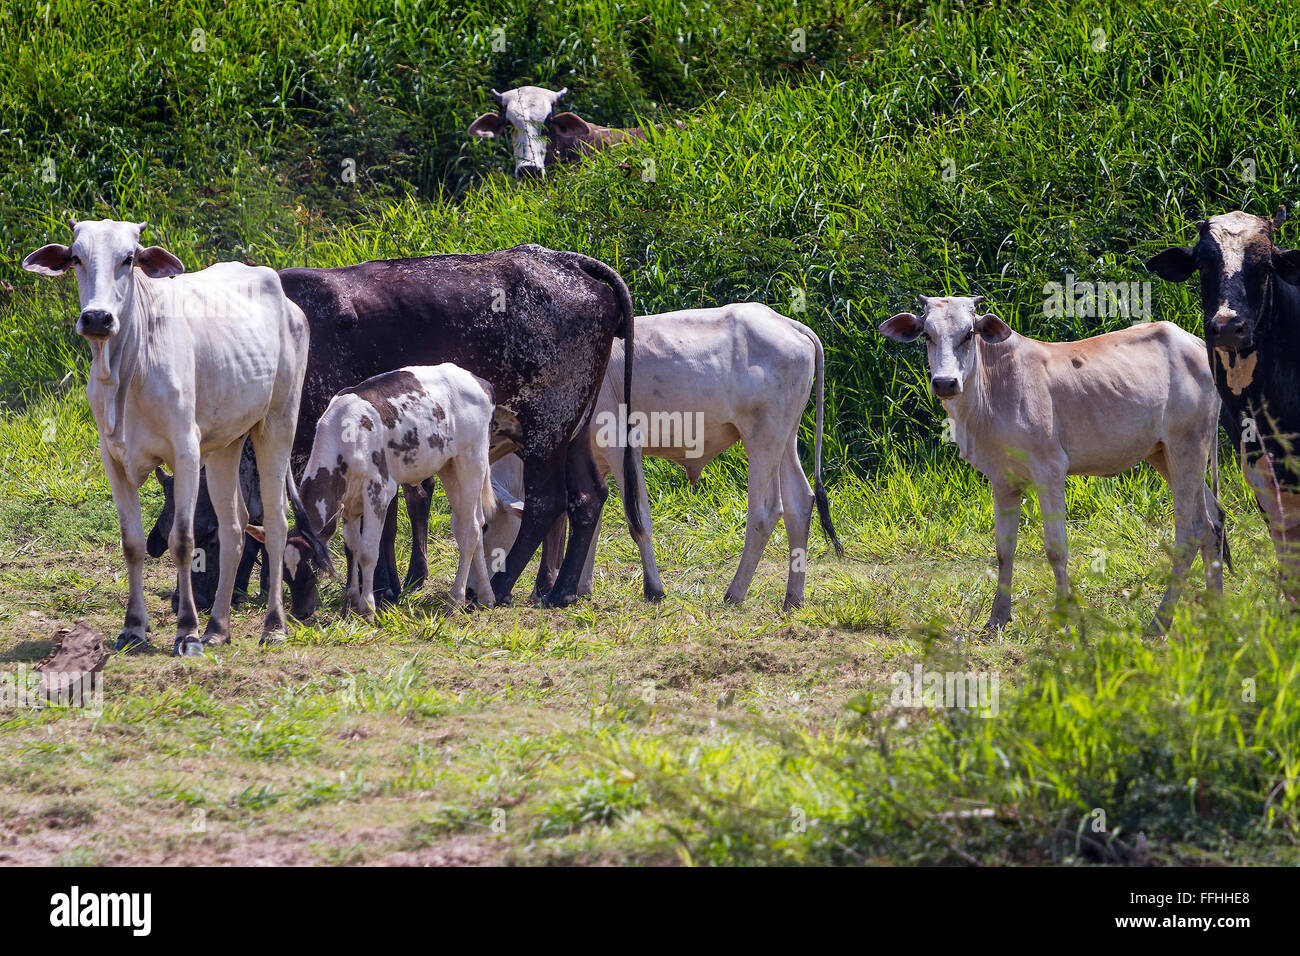 Indo-Brazilian Humped Cattle Santarem Brazil Stock Photo